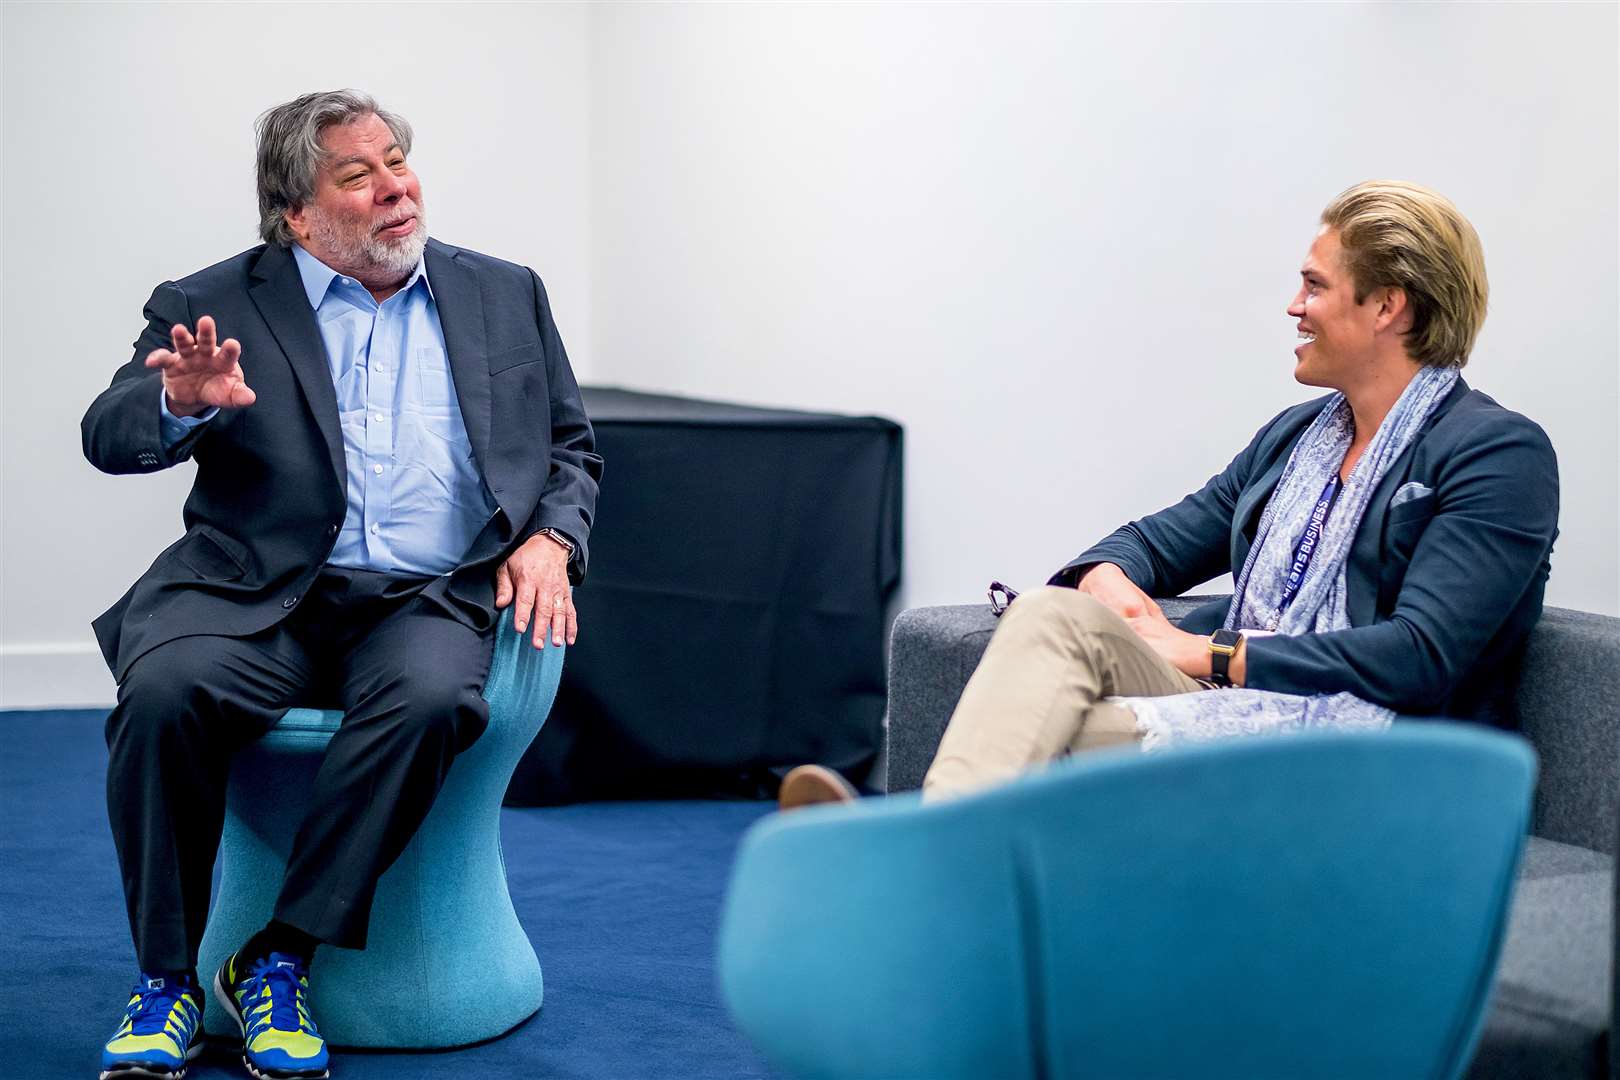 David de Min chatting to Apple co-founder Steve Wozniak at Business Rocks Image: Dan Taylor/Dan Taylor Photography